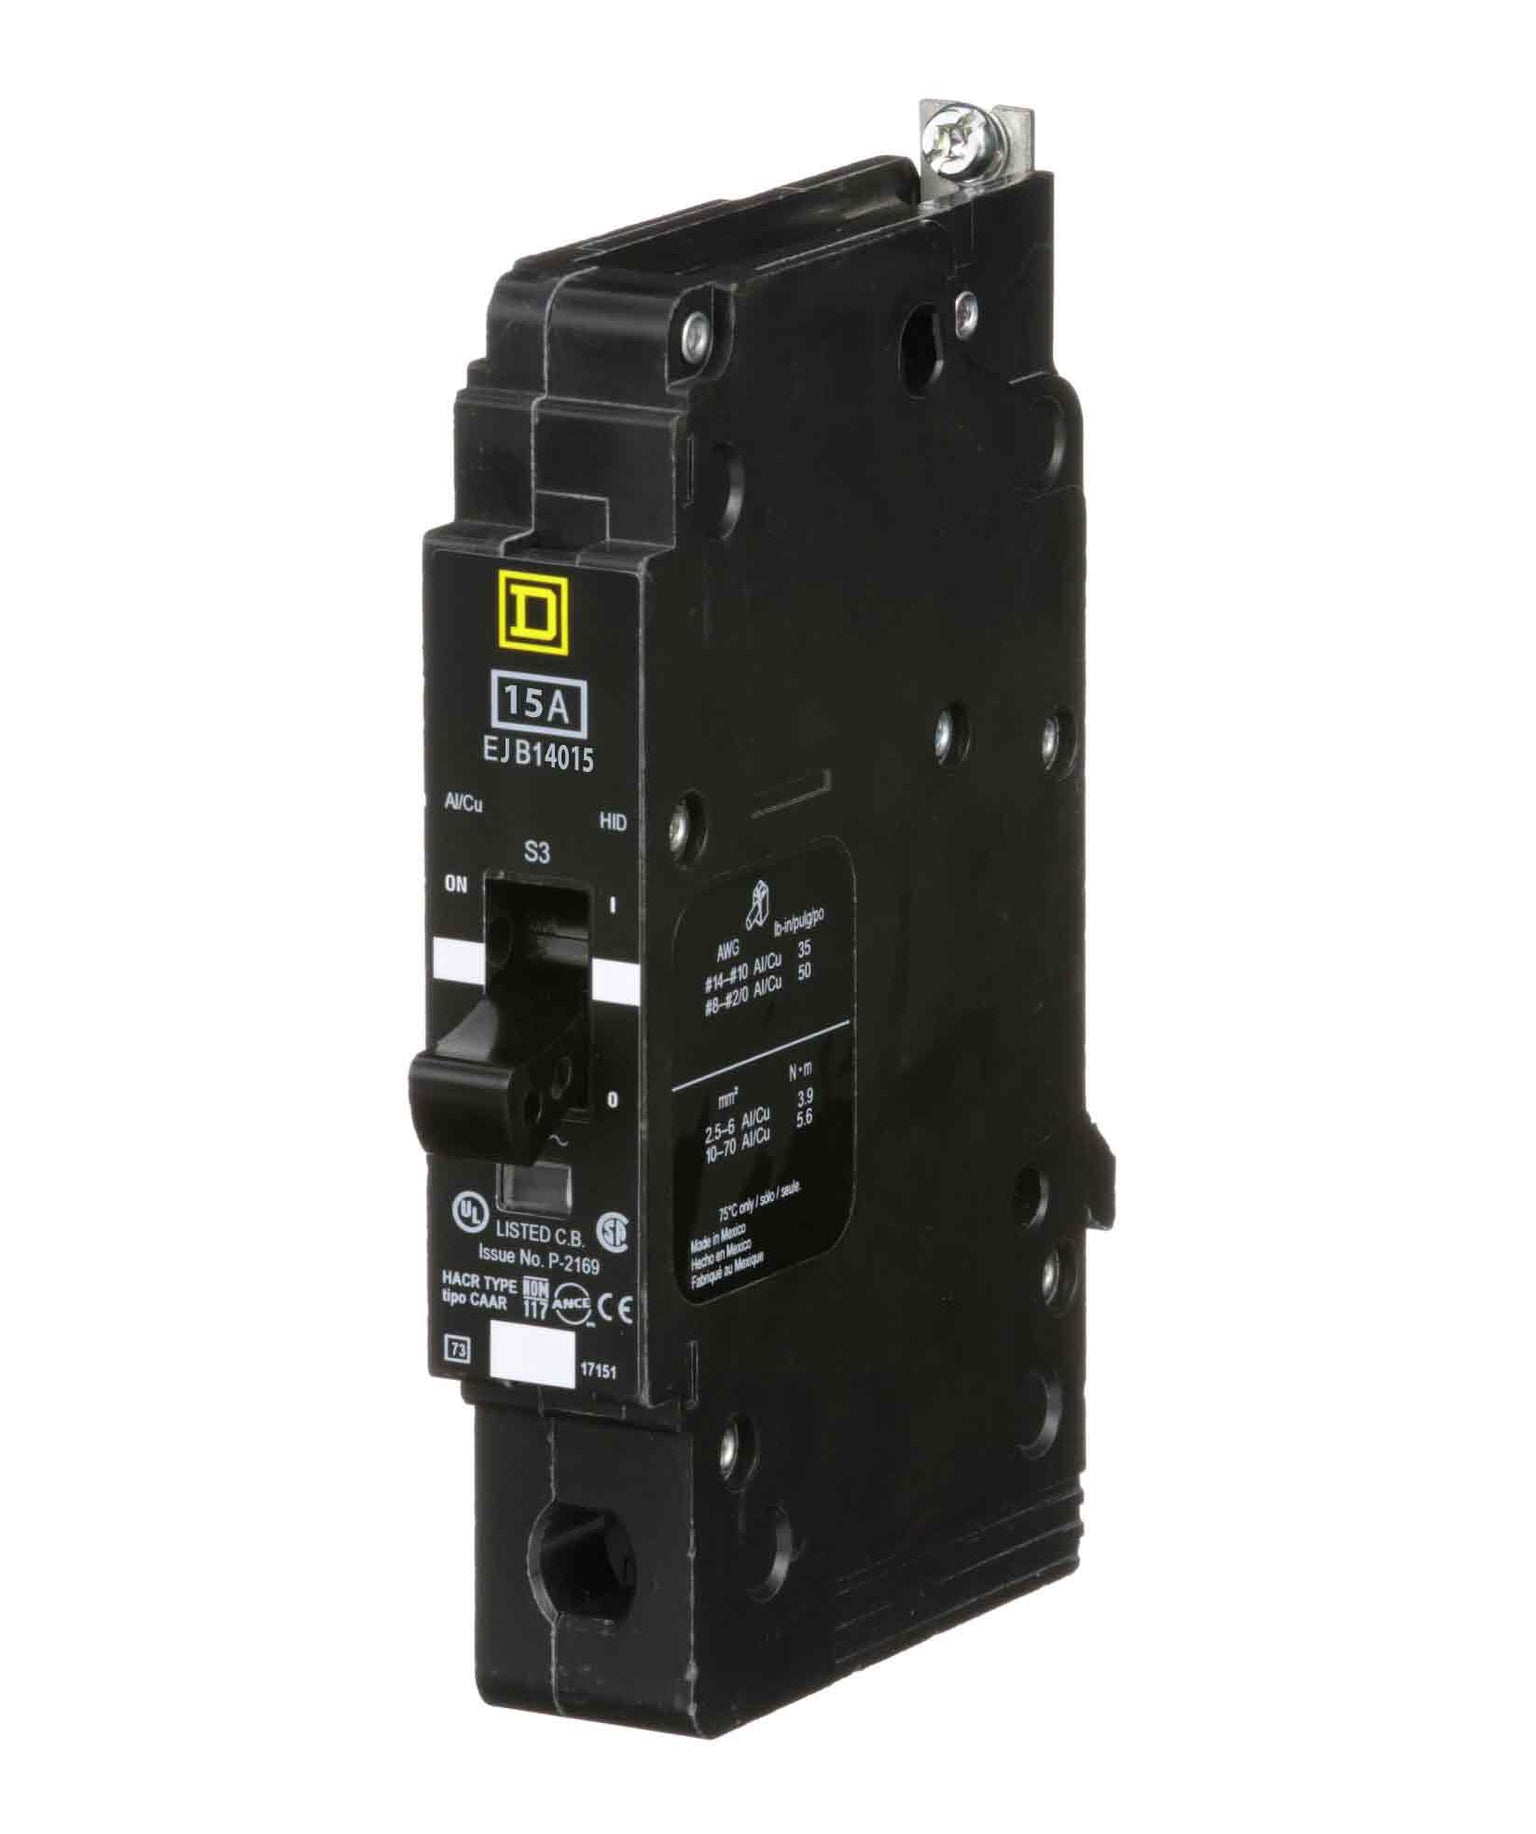 EJB16015 - Square D 15 Amp 1 Pole 347 Volt Bolt-On Molded Case Circuit Breaker